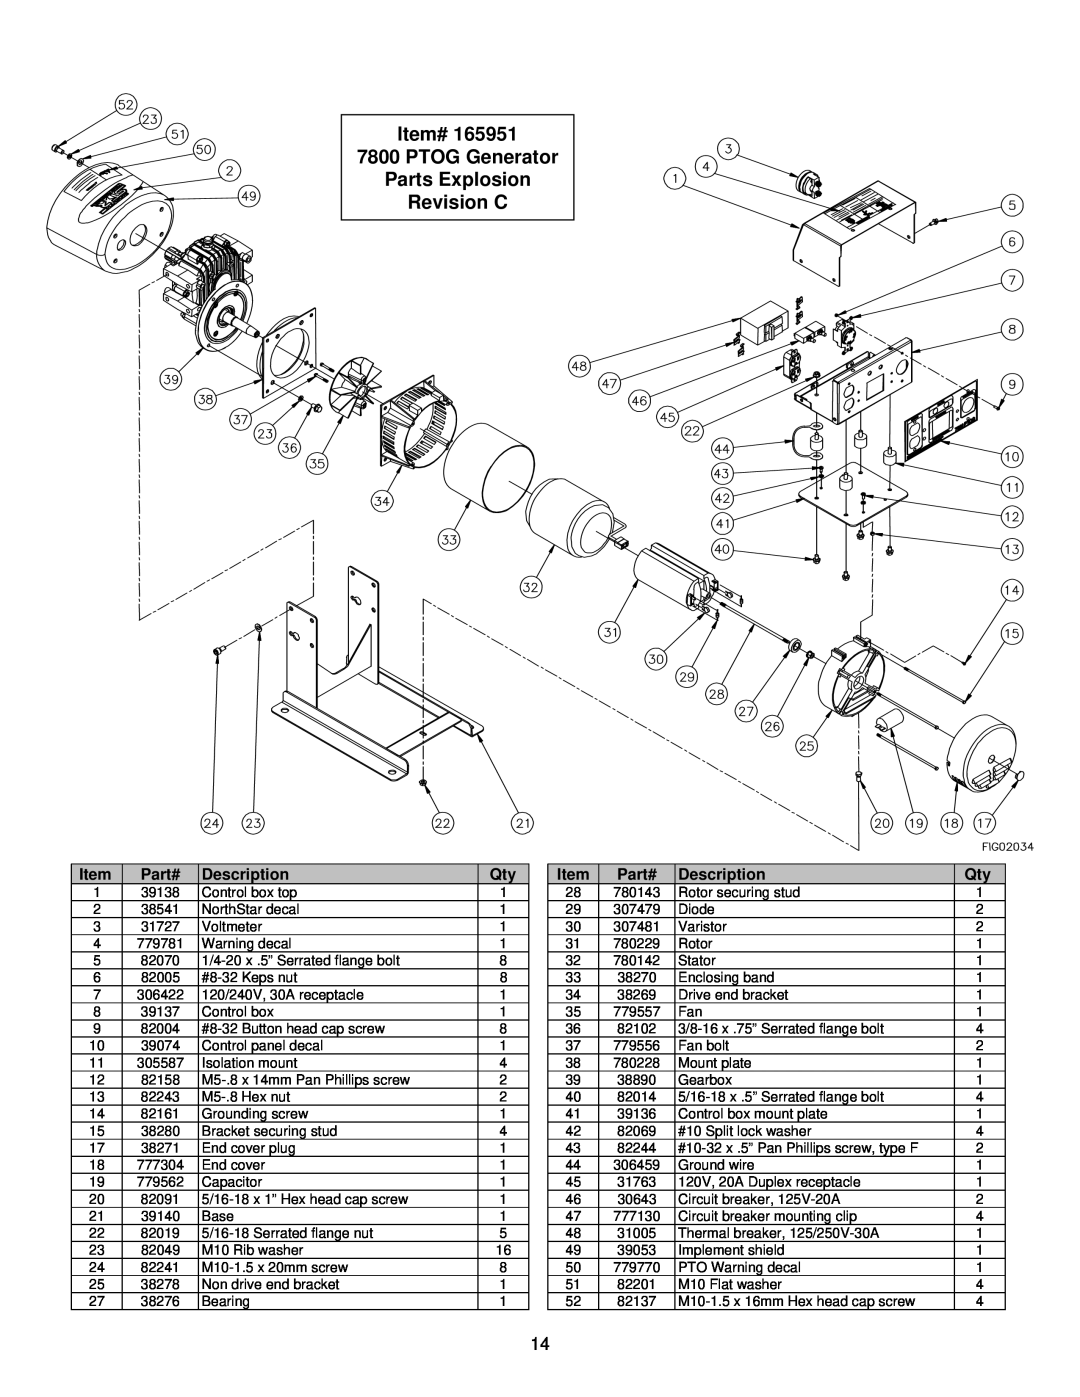 North Star M165951C owner manual Item# 7800 PTOG Generator Parts Explosion Revision C, Part#, Description 